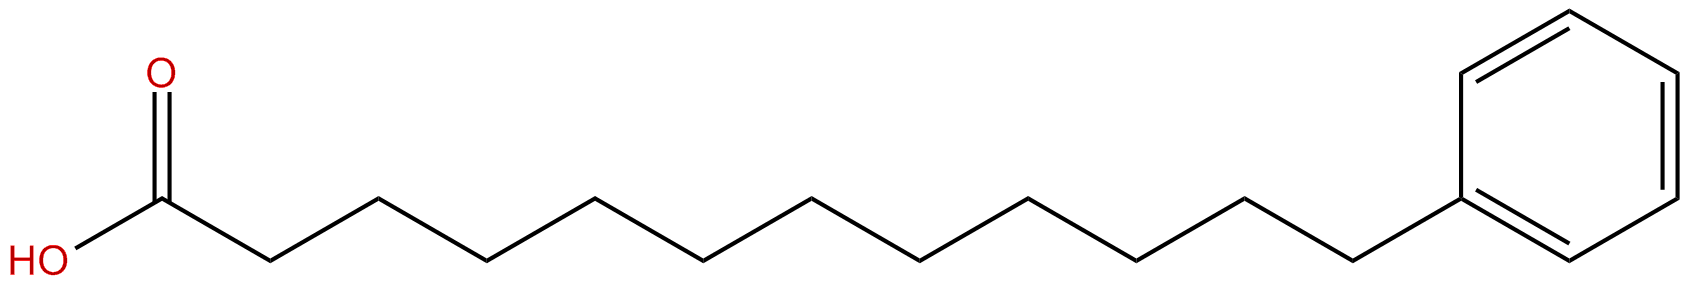 Image of 12-phenyldodecanoic acid